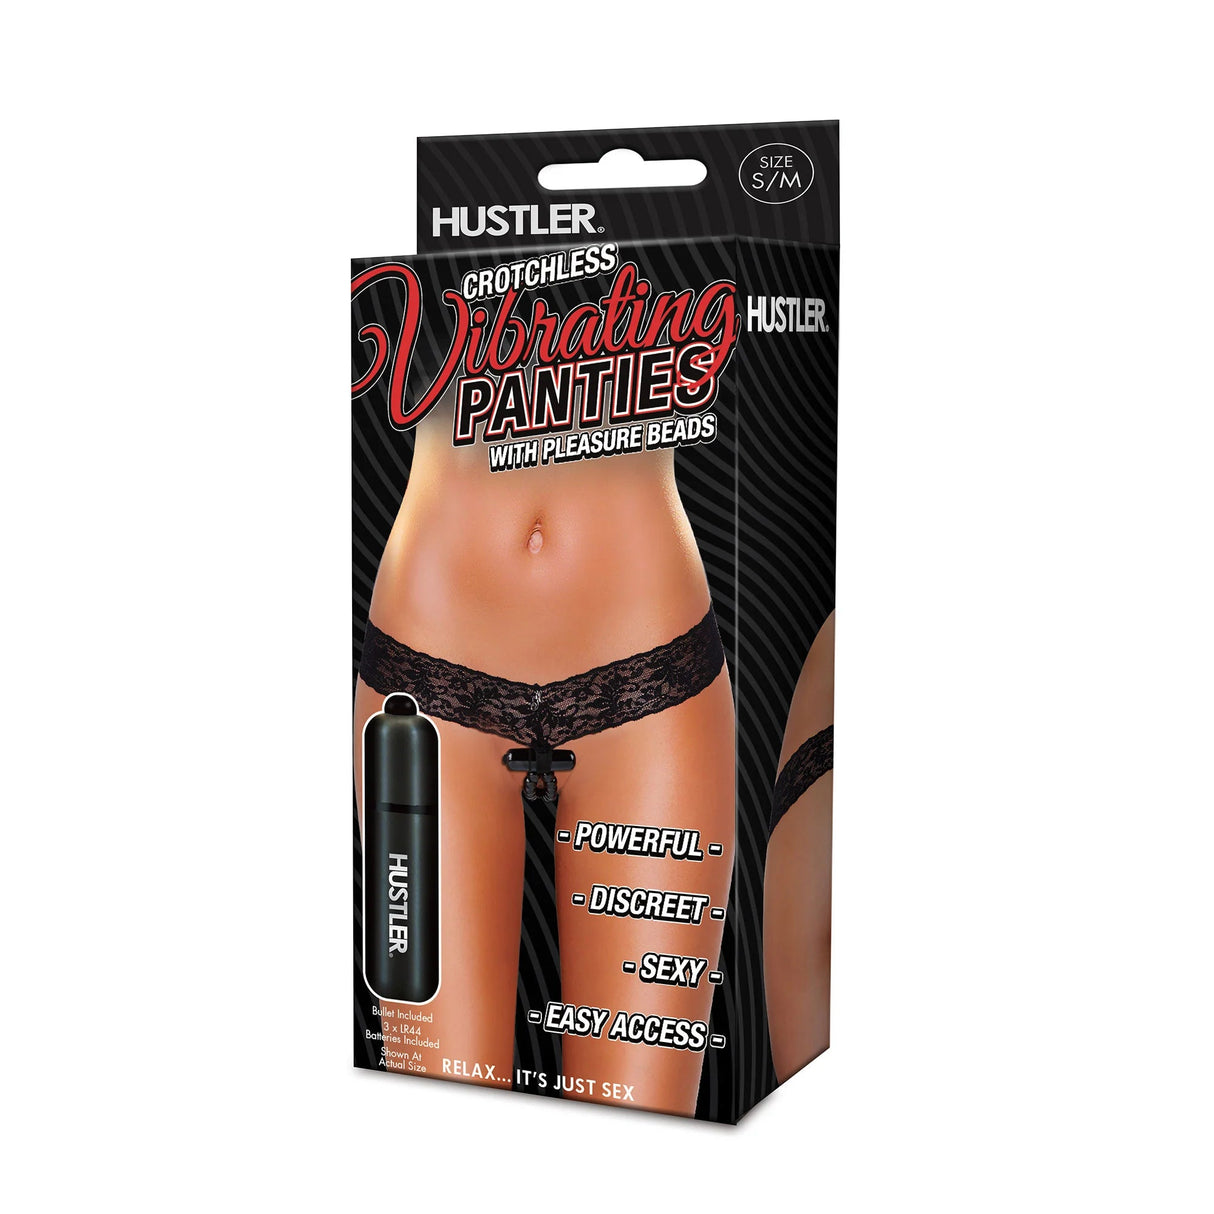 Hustler Vibrating Panties with Hidden Vibe Pocket